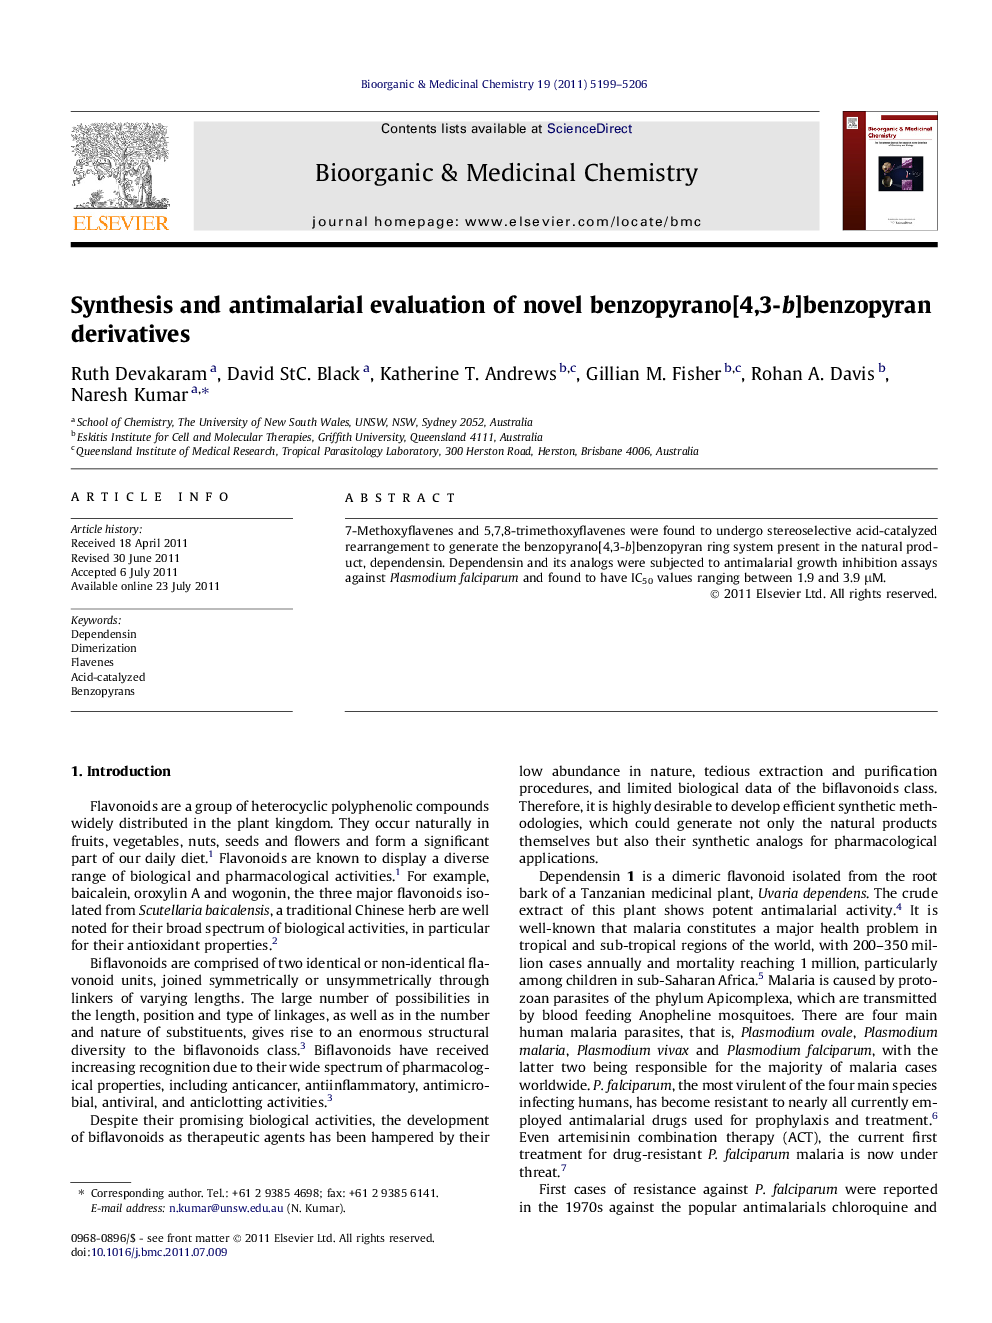 Synthesis and antimalarial evaluation of novel benzopyrano[4,3-b]benzopyran derivatives